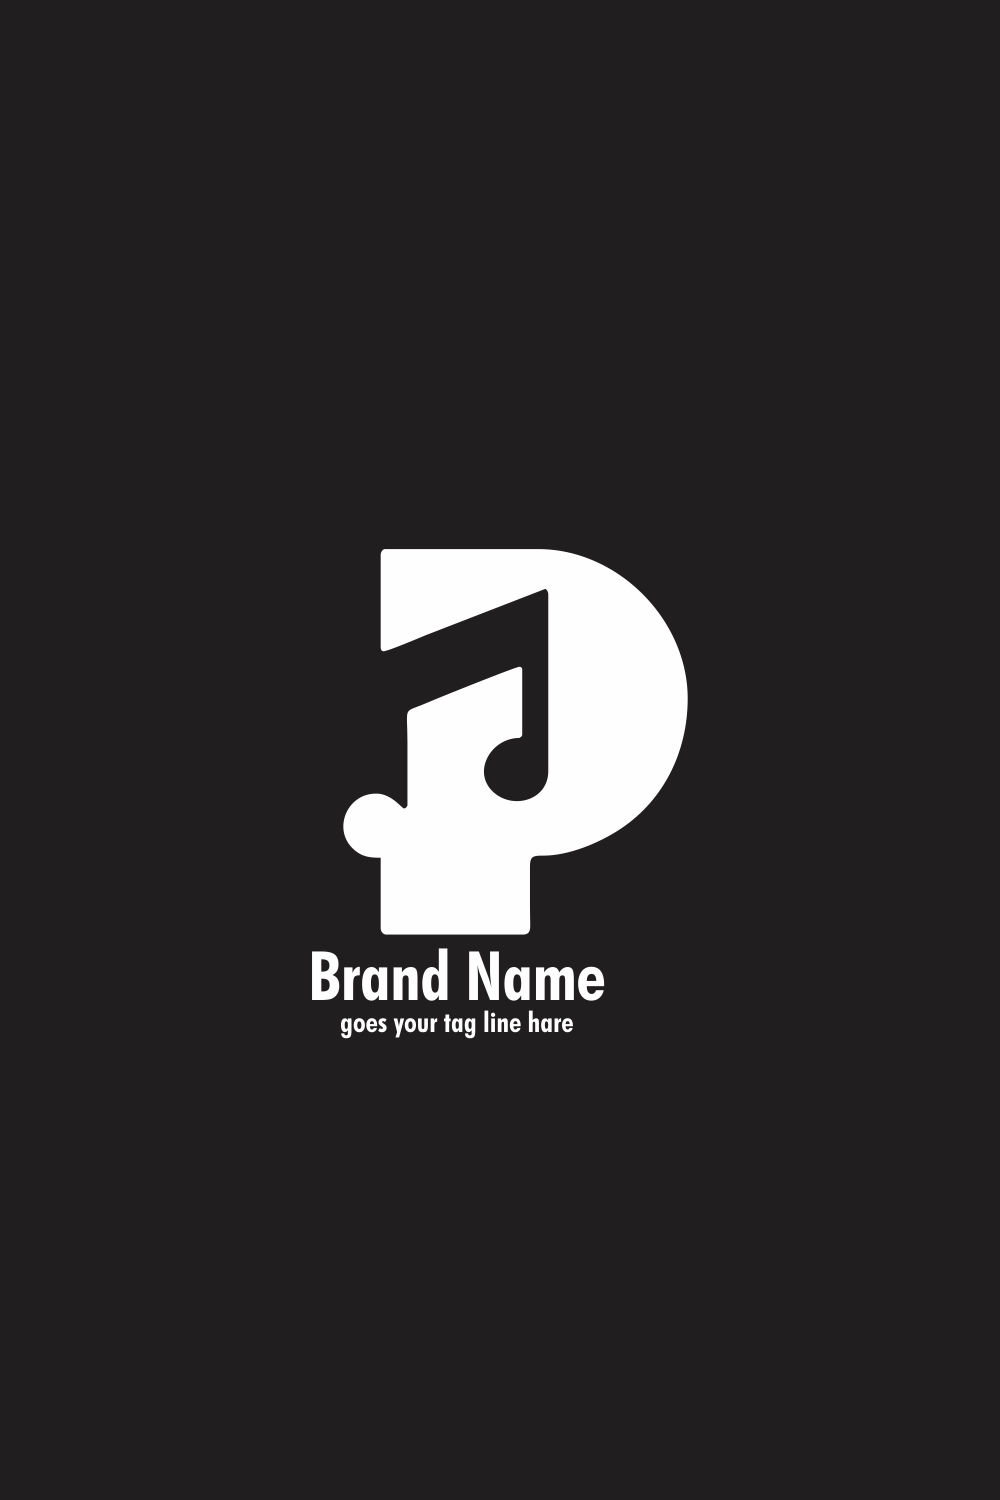 Music P Letter Logo pinterest preview image.